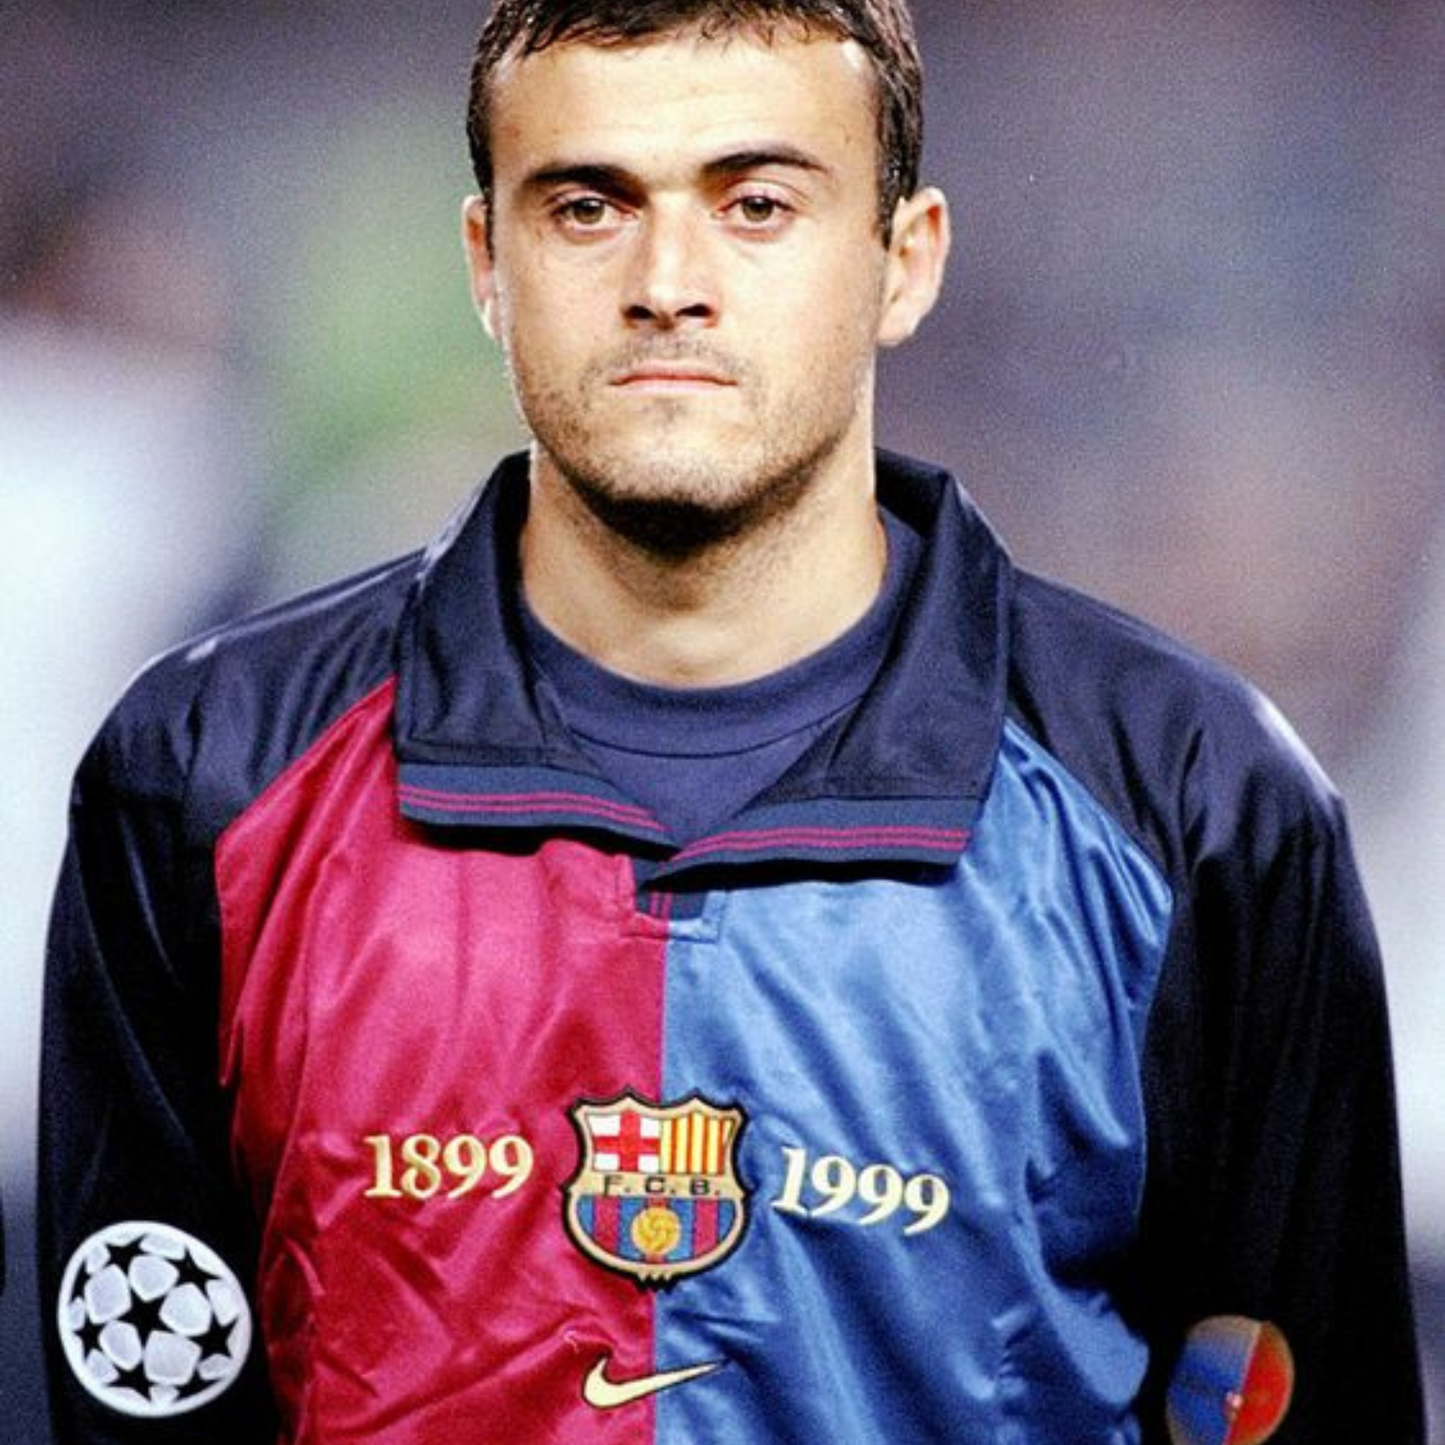 1999 FC Barcelona Home 100th Anniversary Retro Soccer Jersey front side Luis Enrique Portrait1999 Barcelona Jersey - Barcelona Jersey 1999 | MuchoGoal Kits